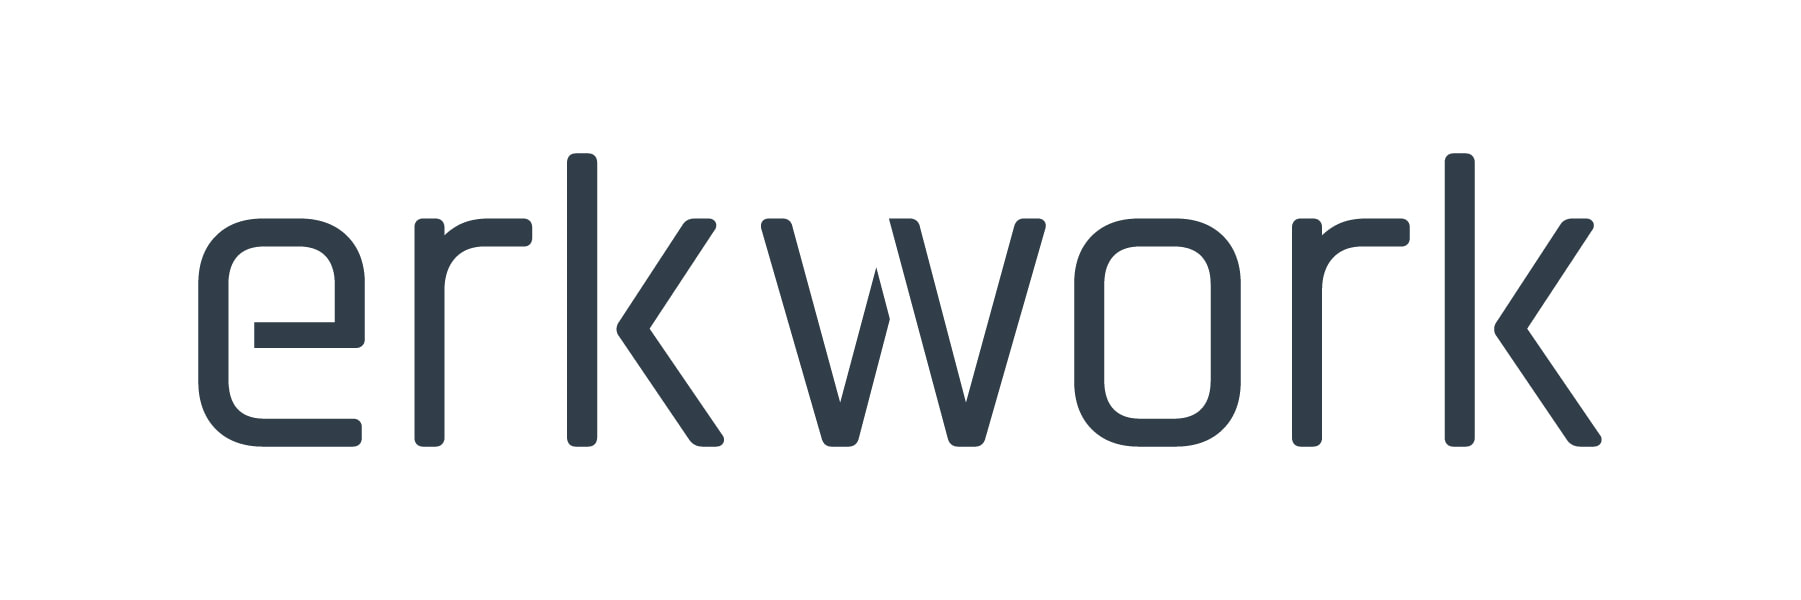 erkwork logo